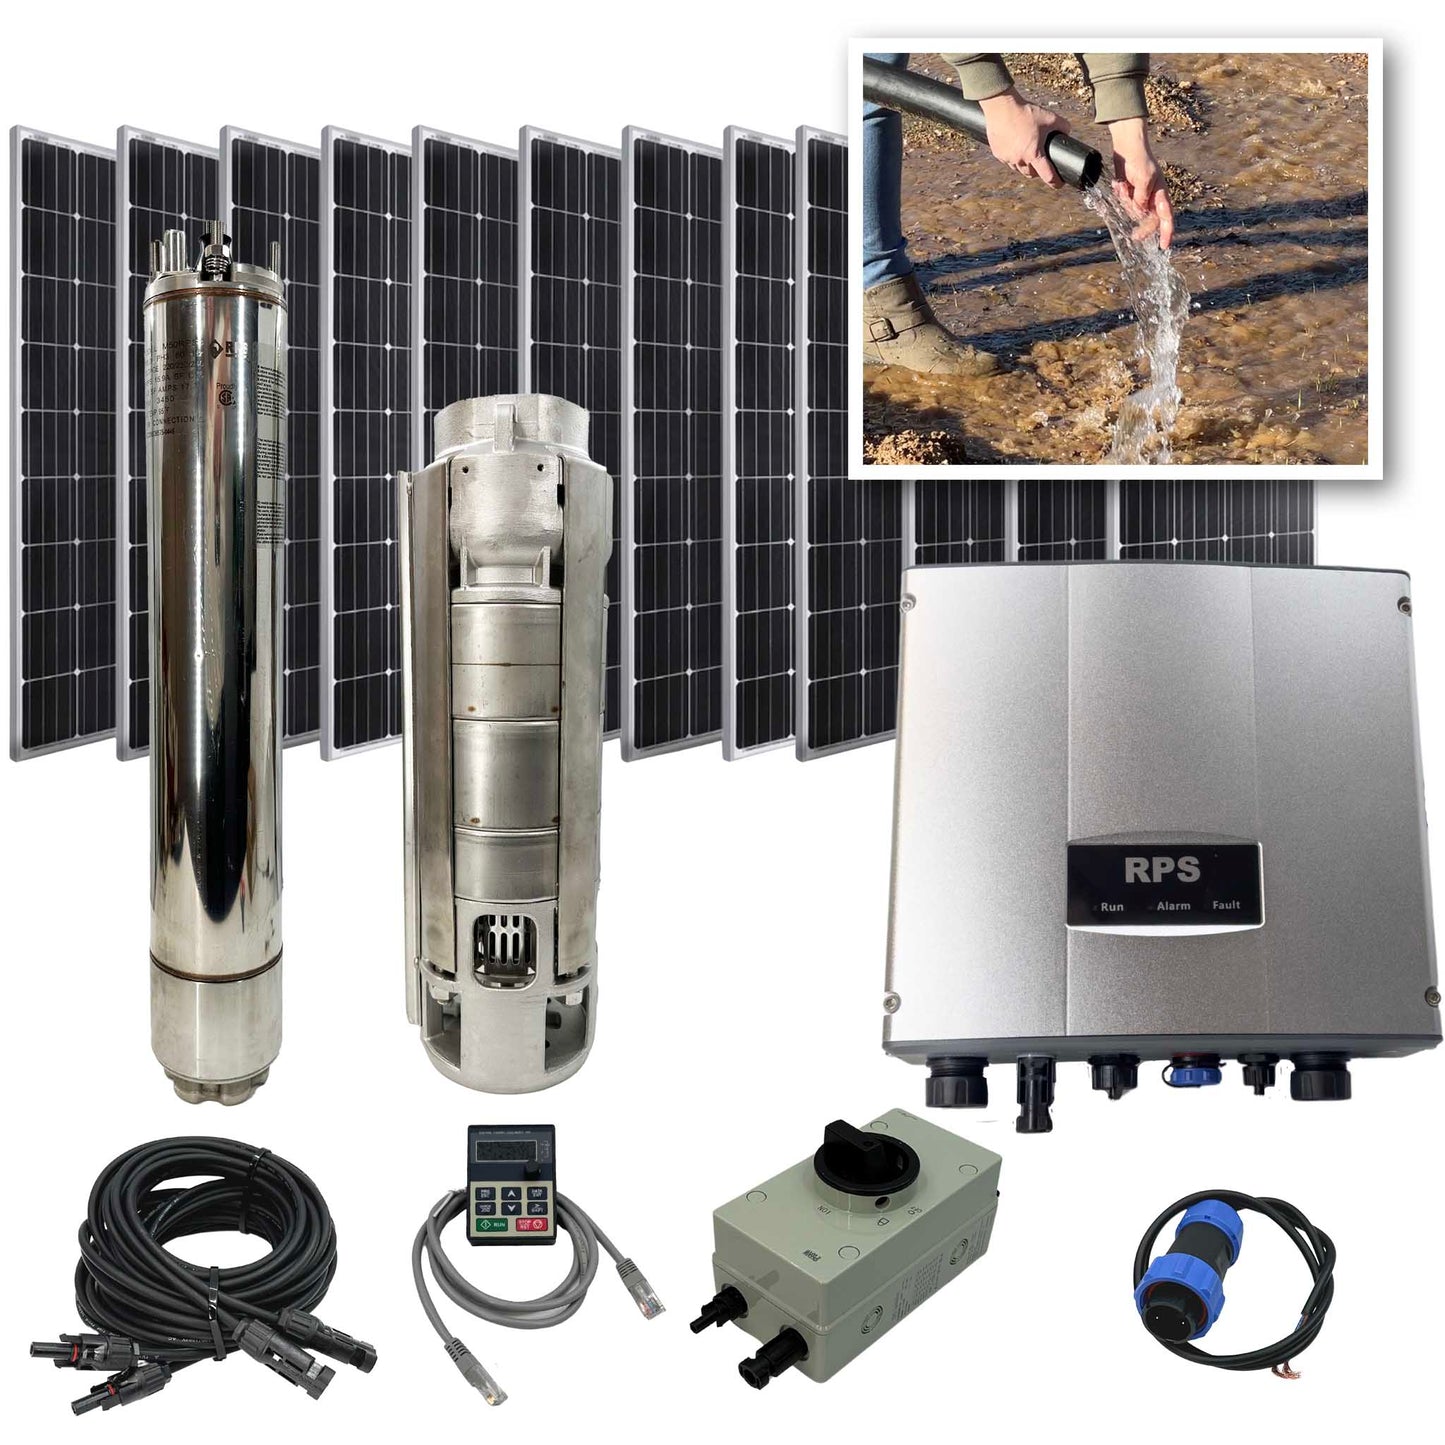 RPS Pro Series Lake Maker XL – RPS Solar Pumps